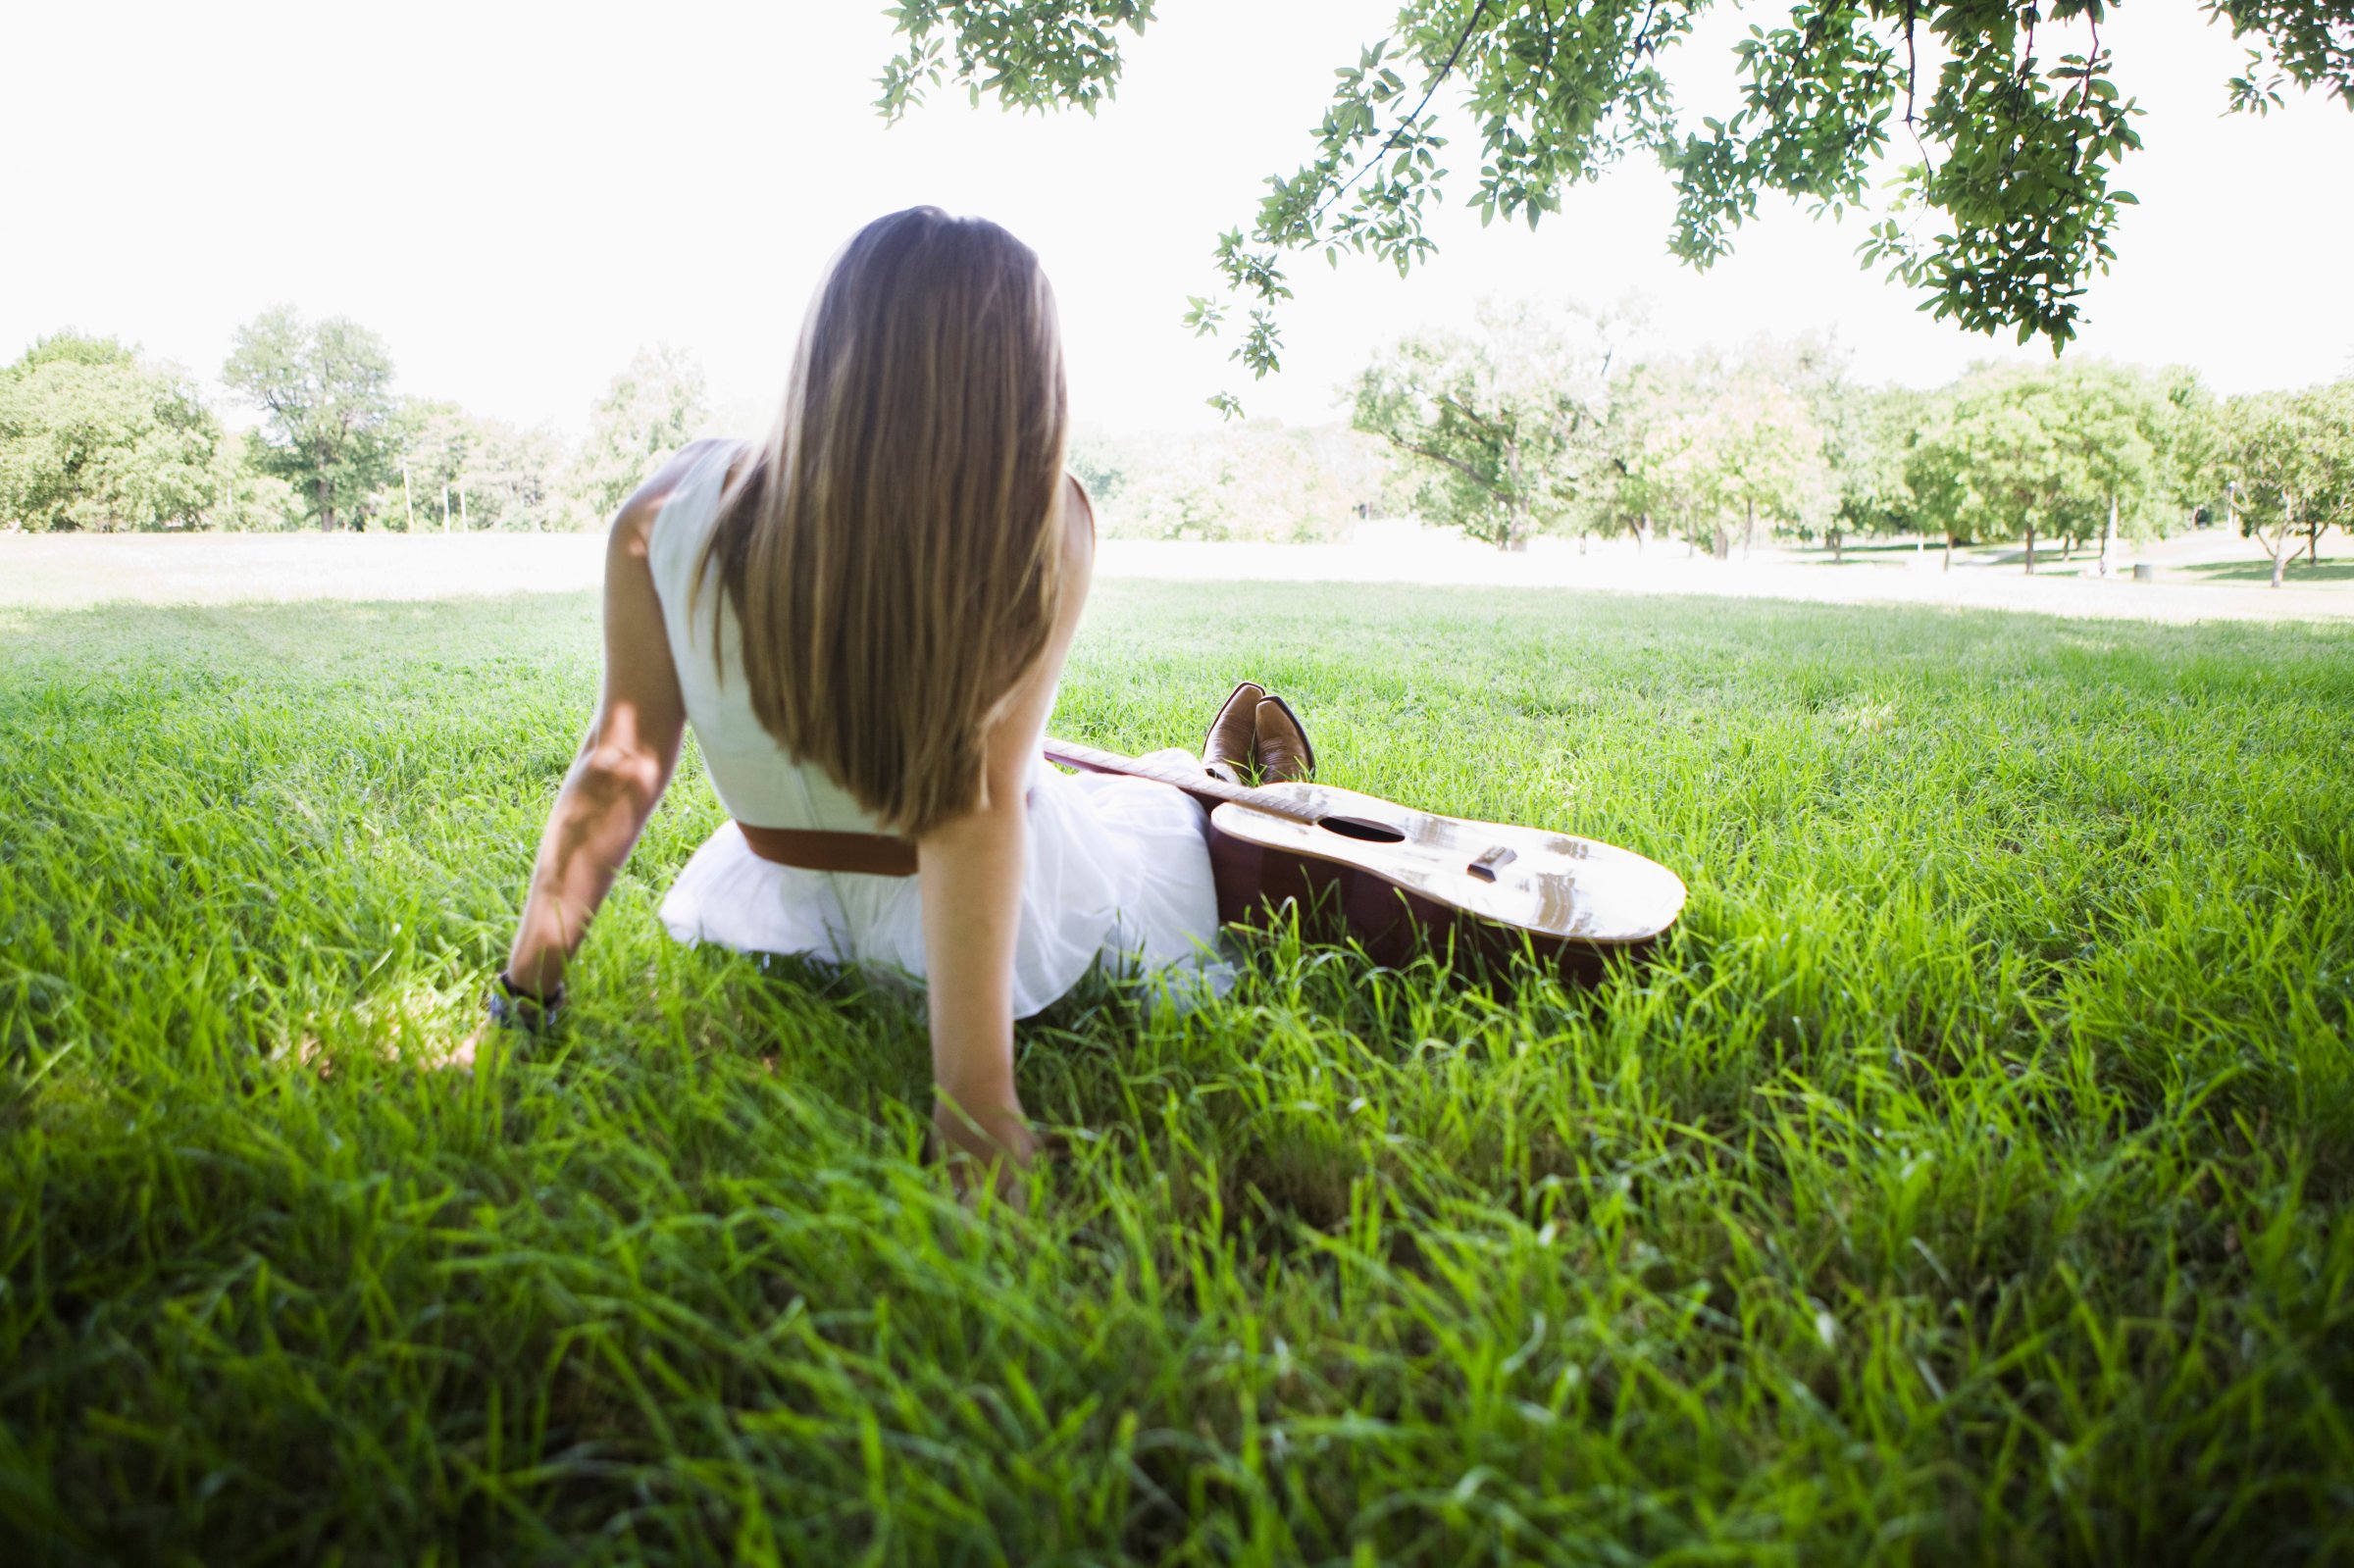 woman-sitting-grass-guitar-rear-view